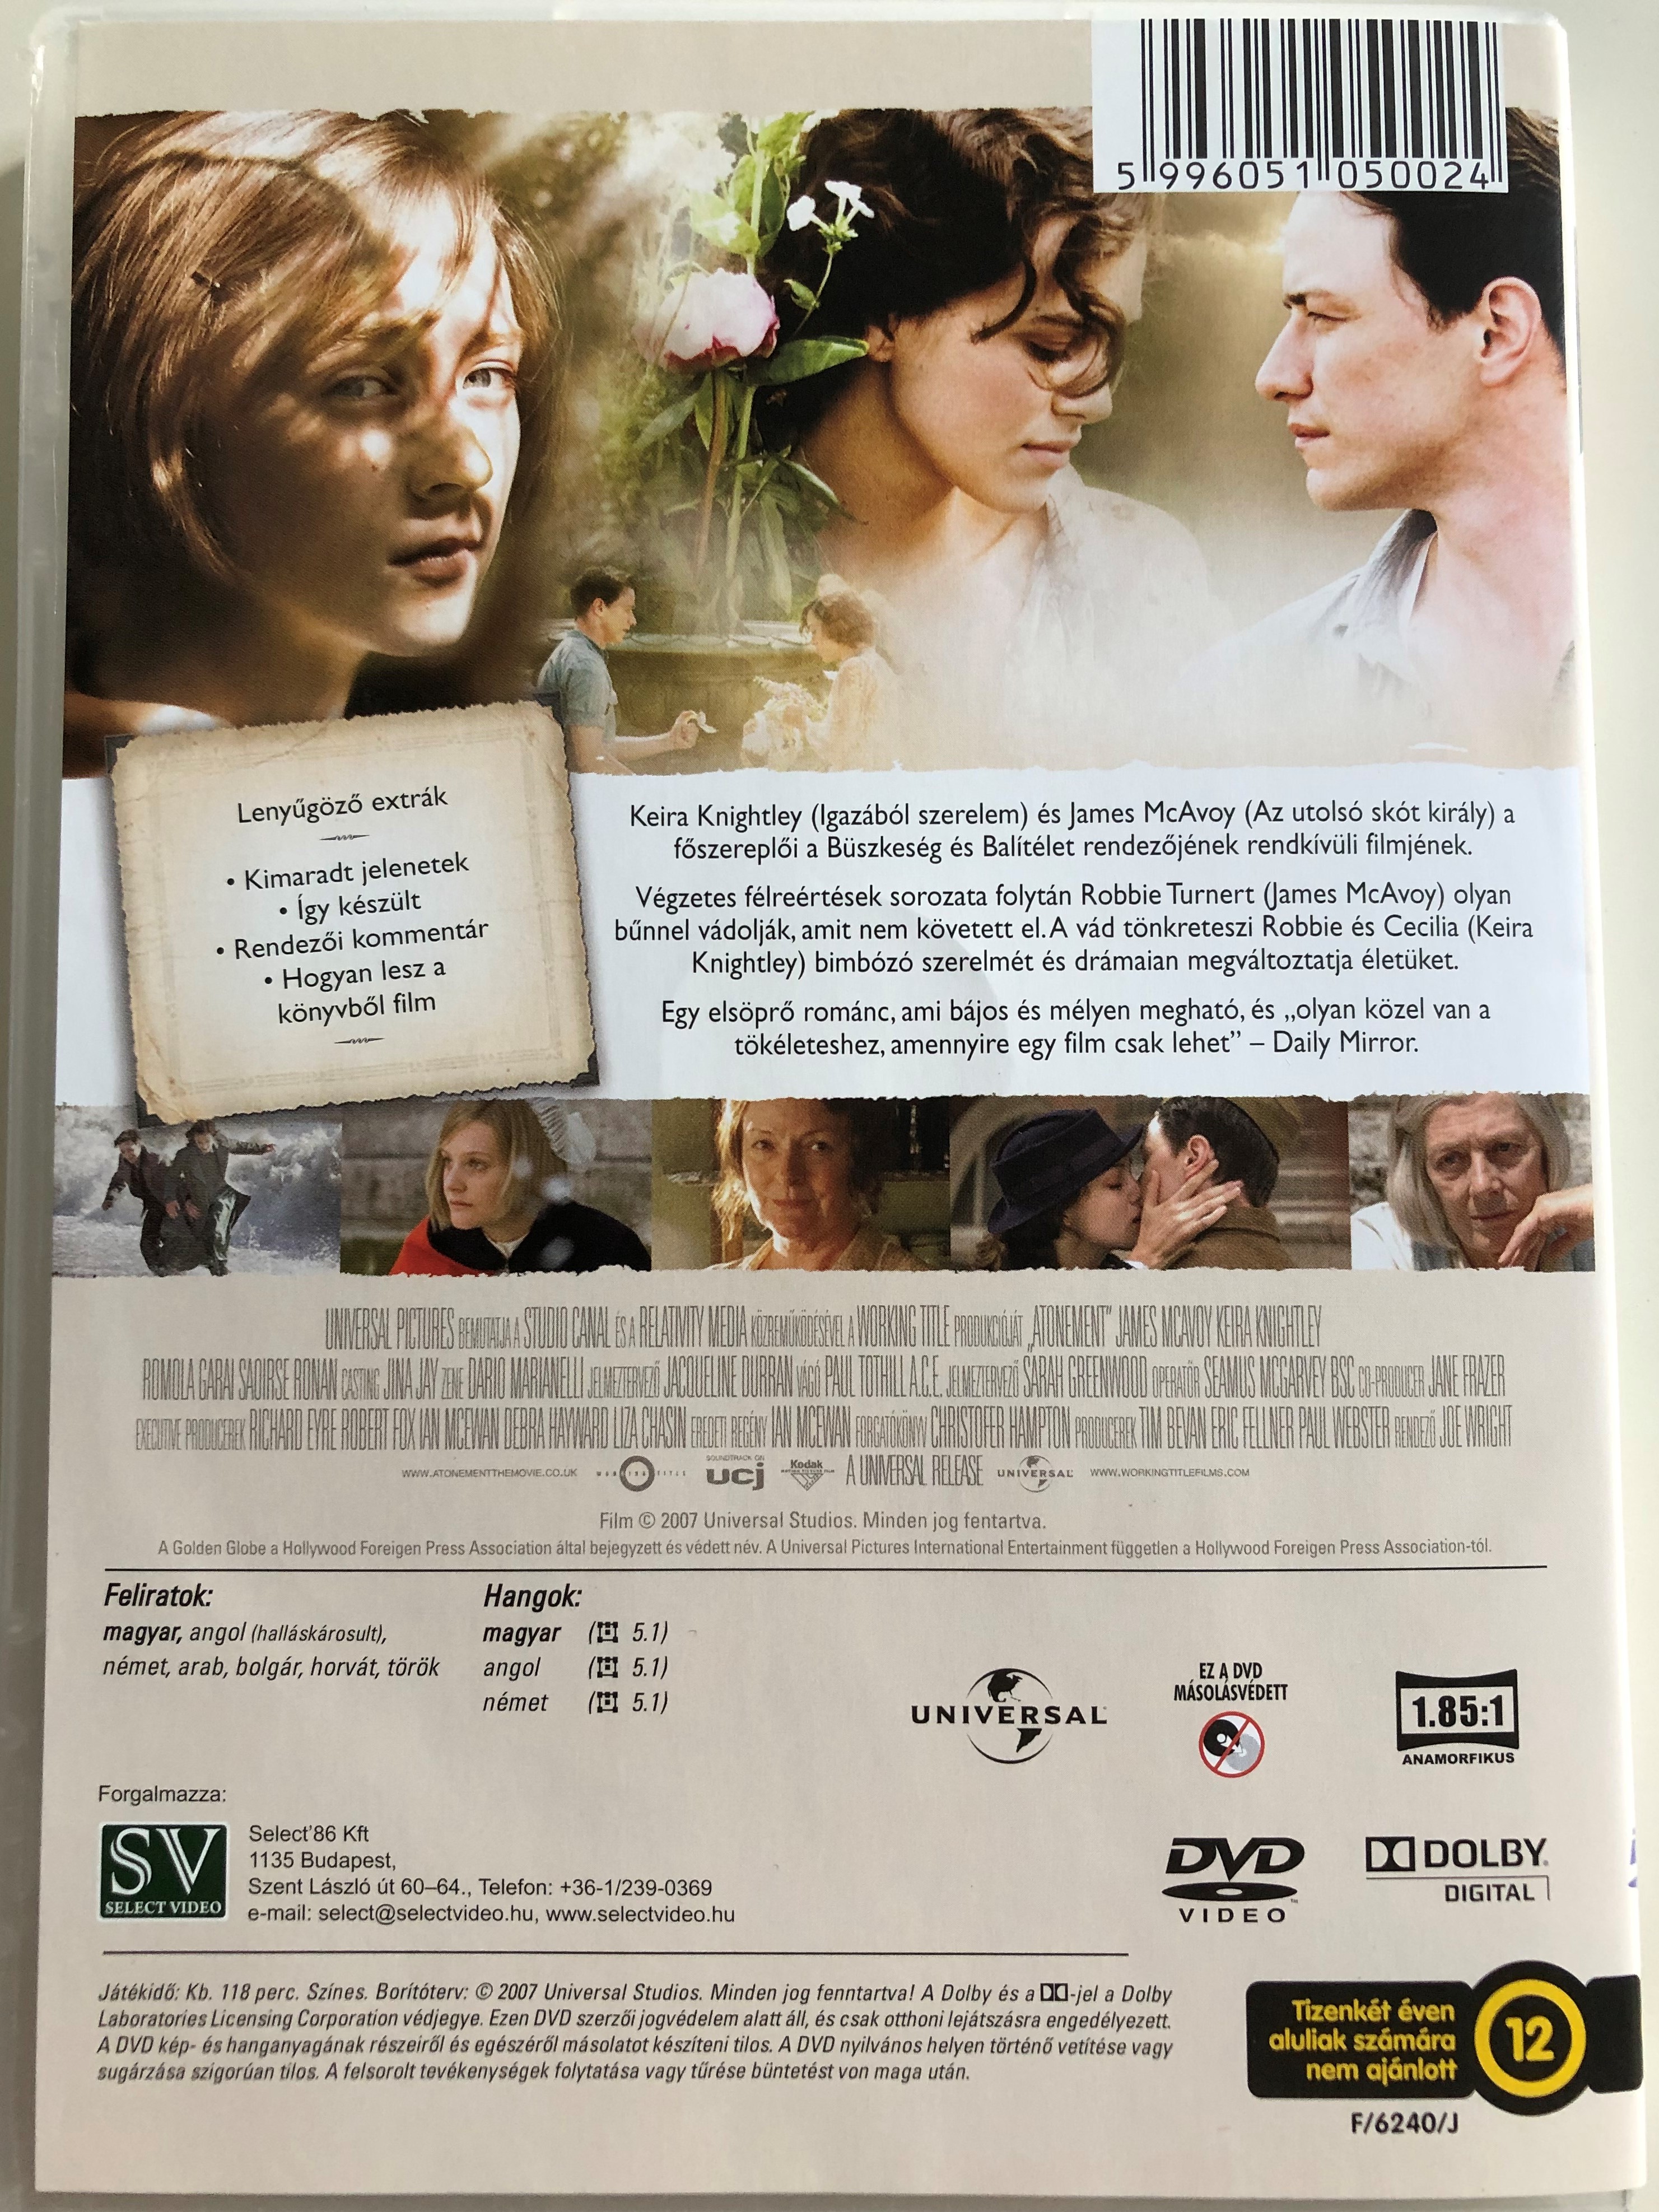 atonement-dvd-2007-v-gy-s-vezekl-s-directed-by-joe-wright-starring-james-mcavoy-keir-knightley-based-on-ian-mcewan-s-bestseller-2-.jpg